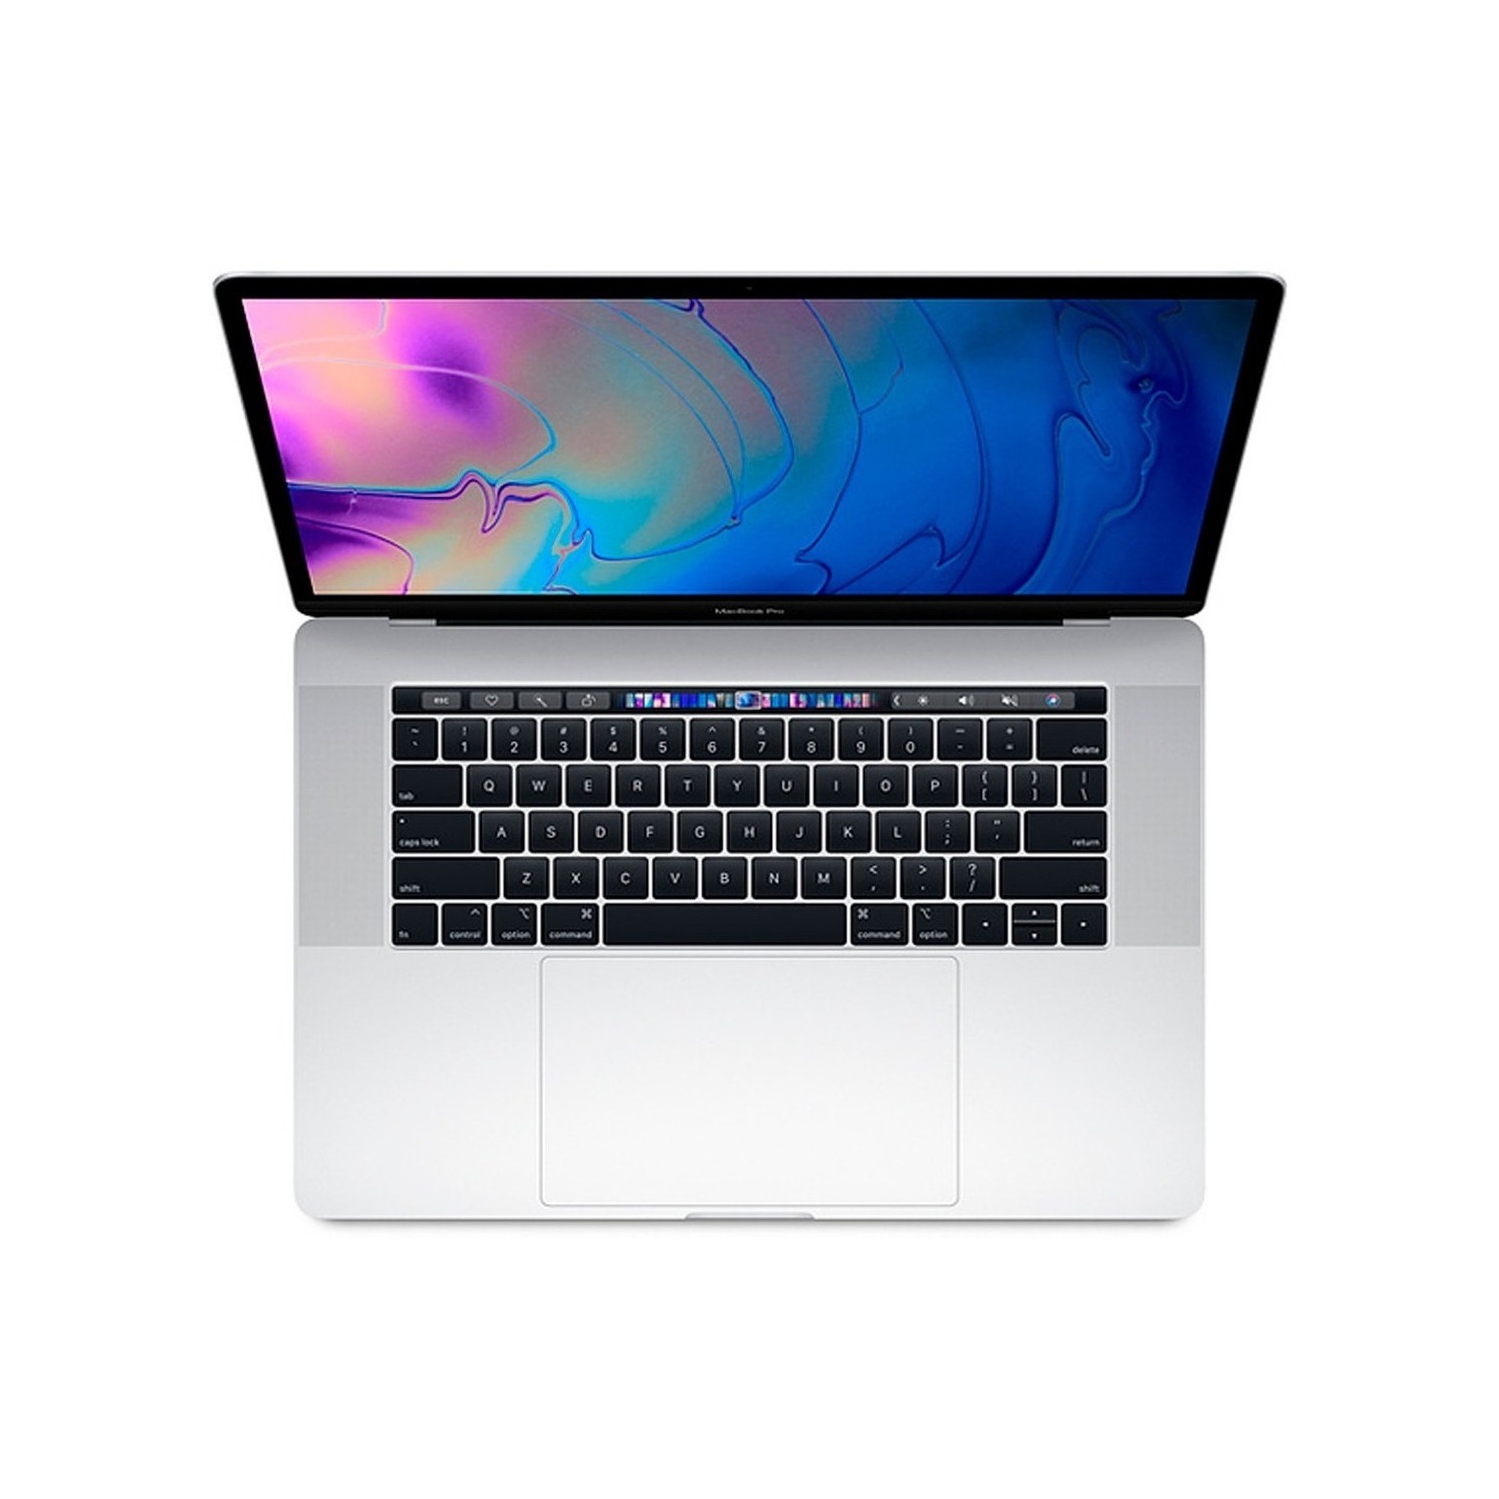 Refurbished (Good) - Apple MacBook Pro 13-Inch - Apple M1 - 8 GPU - 8gb RAM - 256GB SSD - 2020 - MYDA2LL/A - A2338